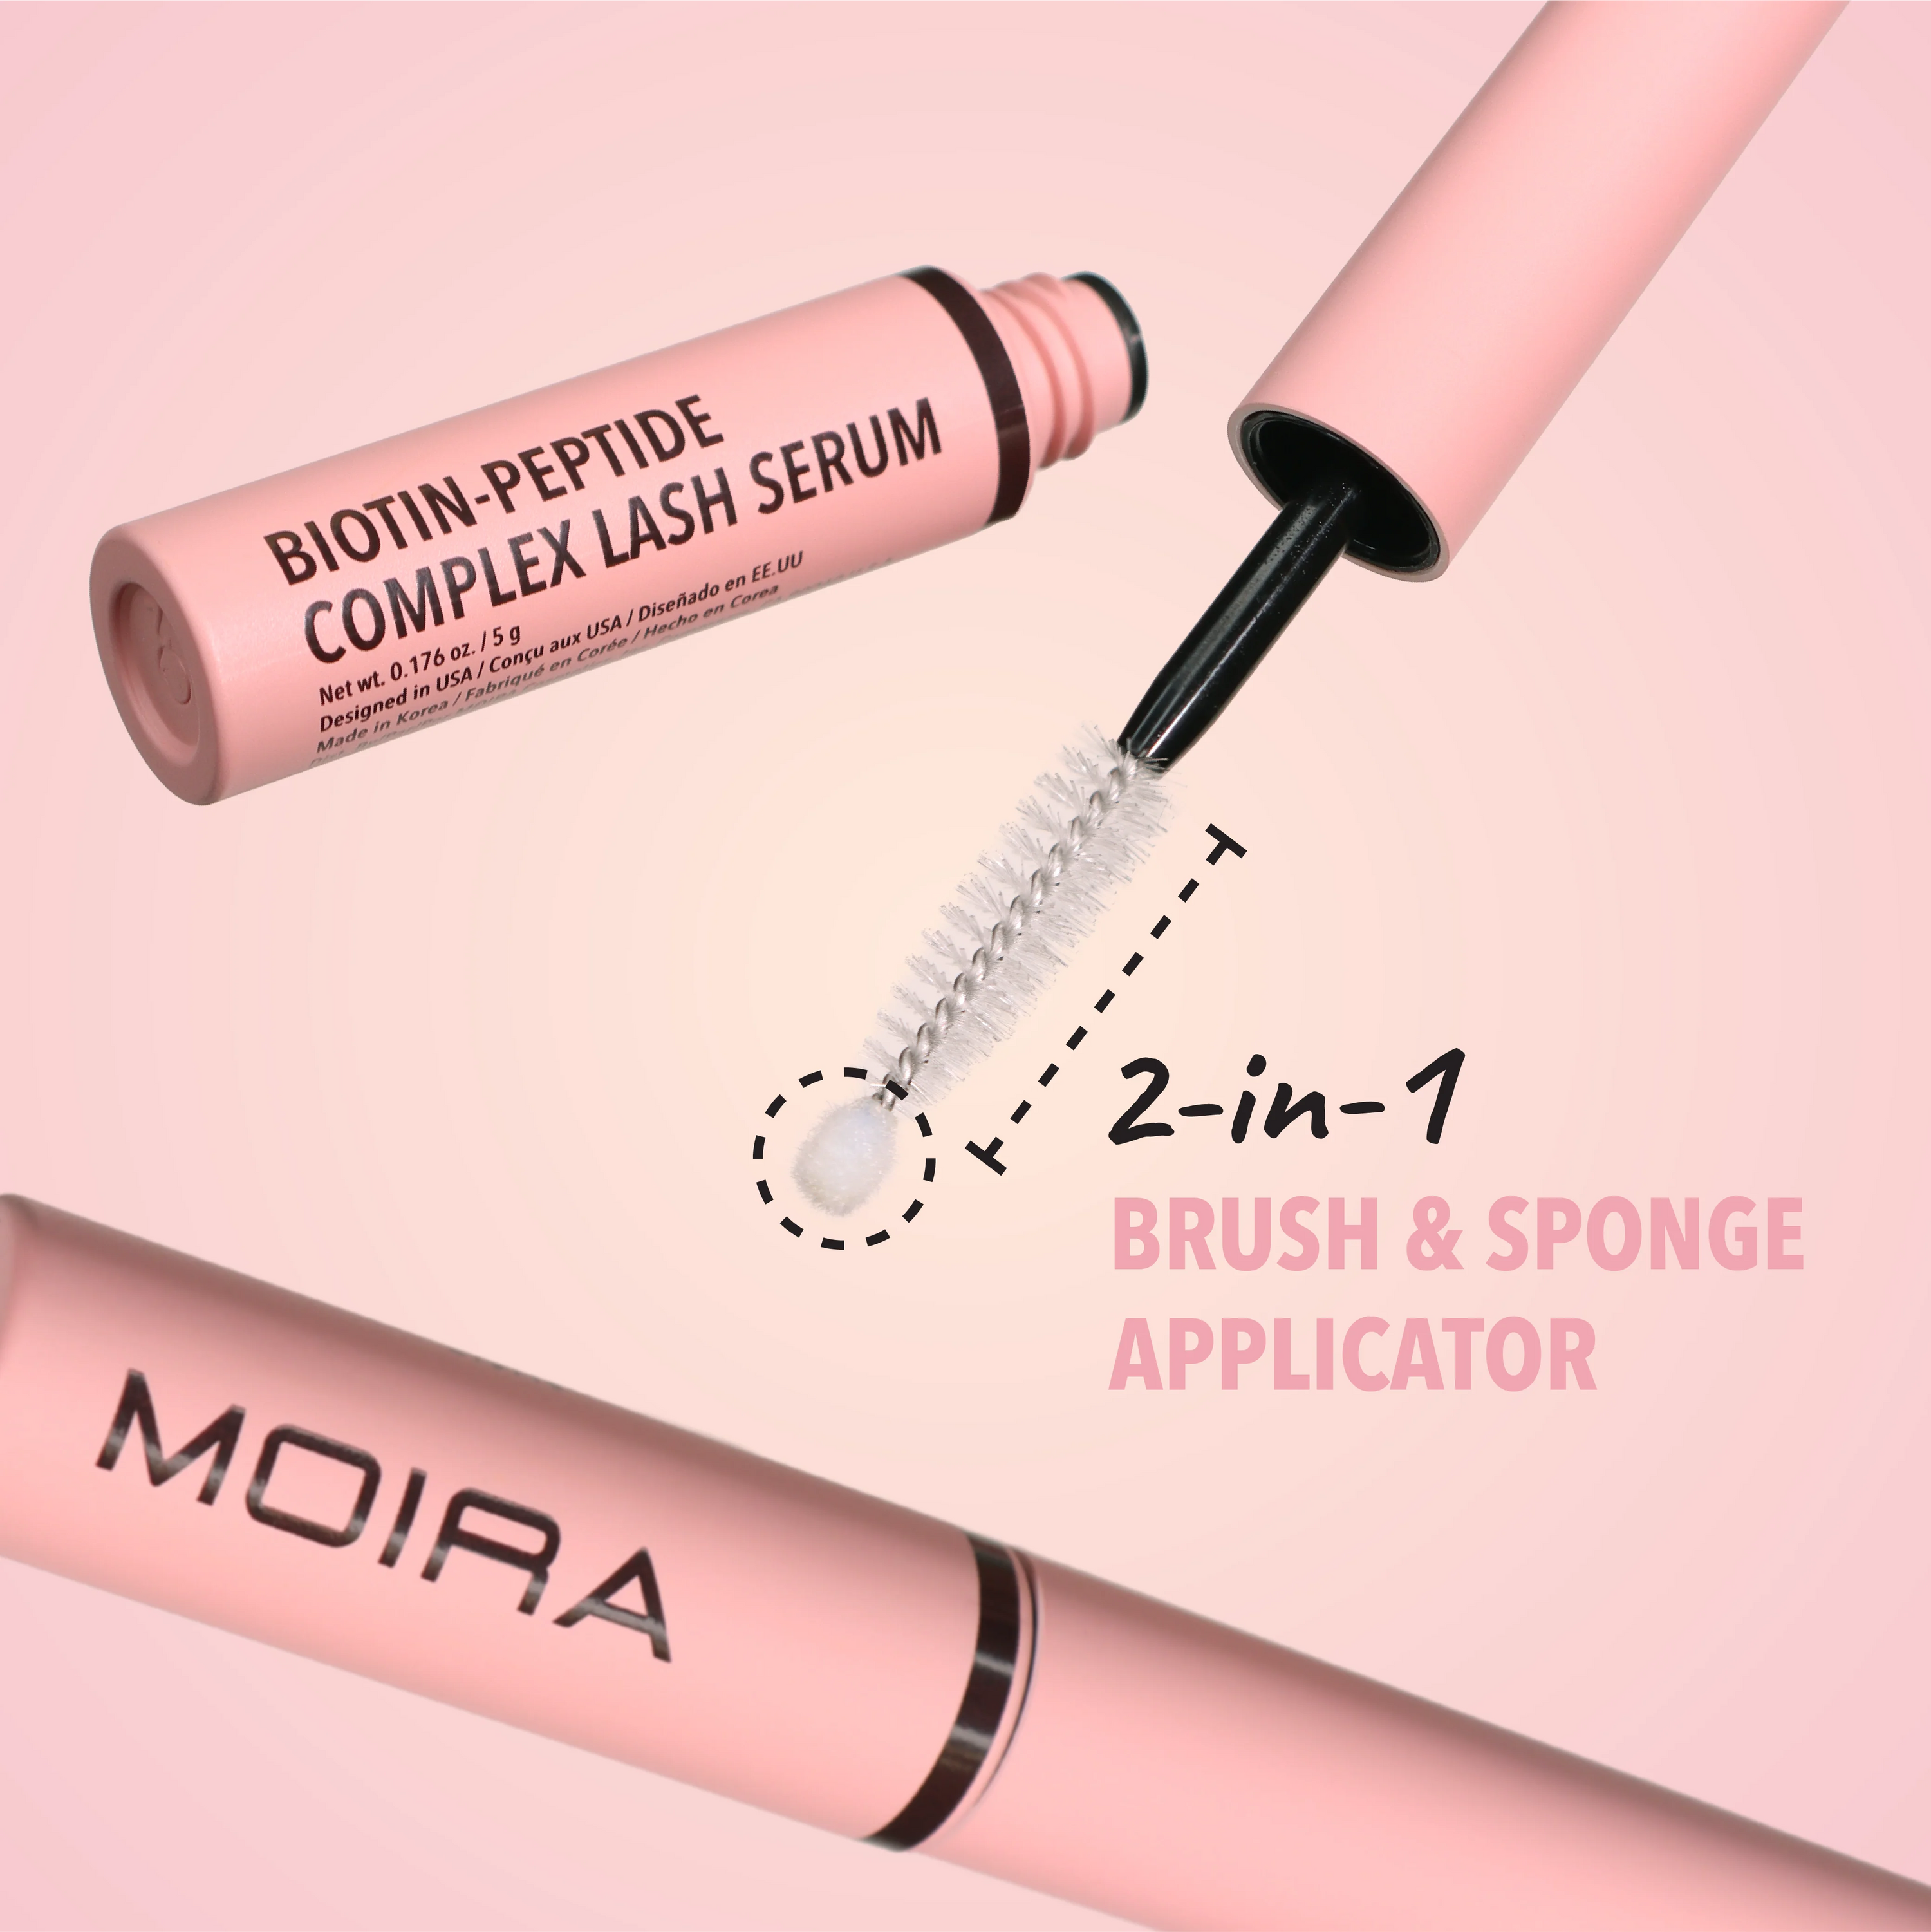 Moira Beauty - Biotin-Peptide Complex Lash Serum